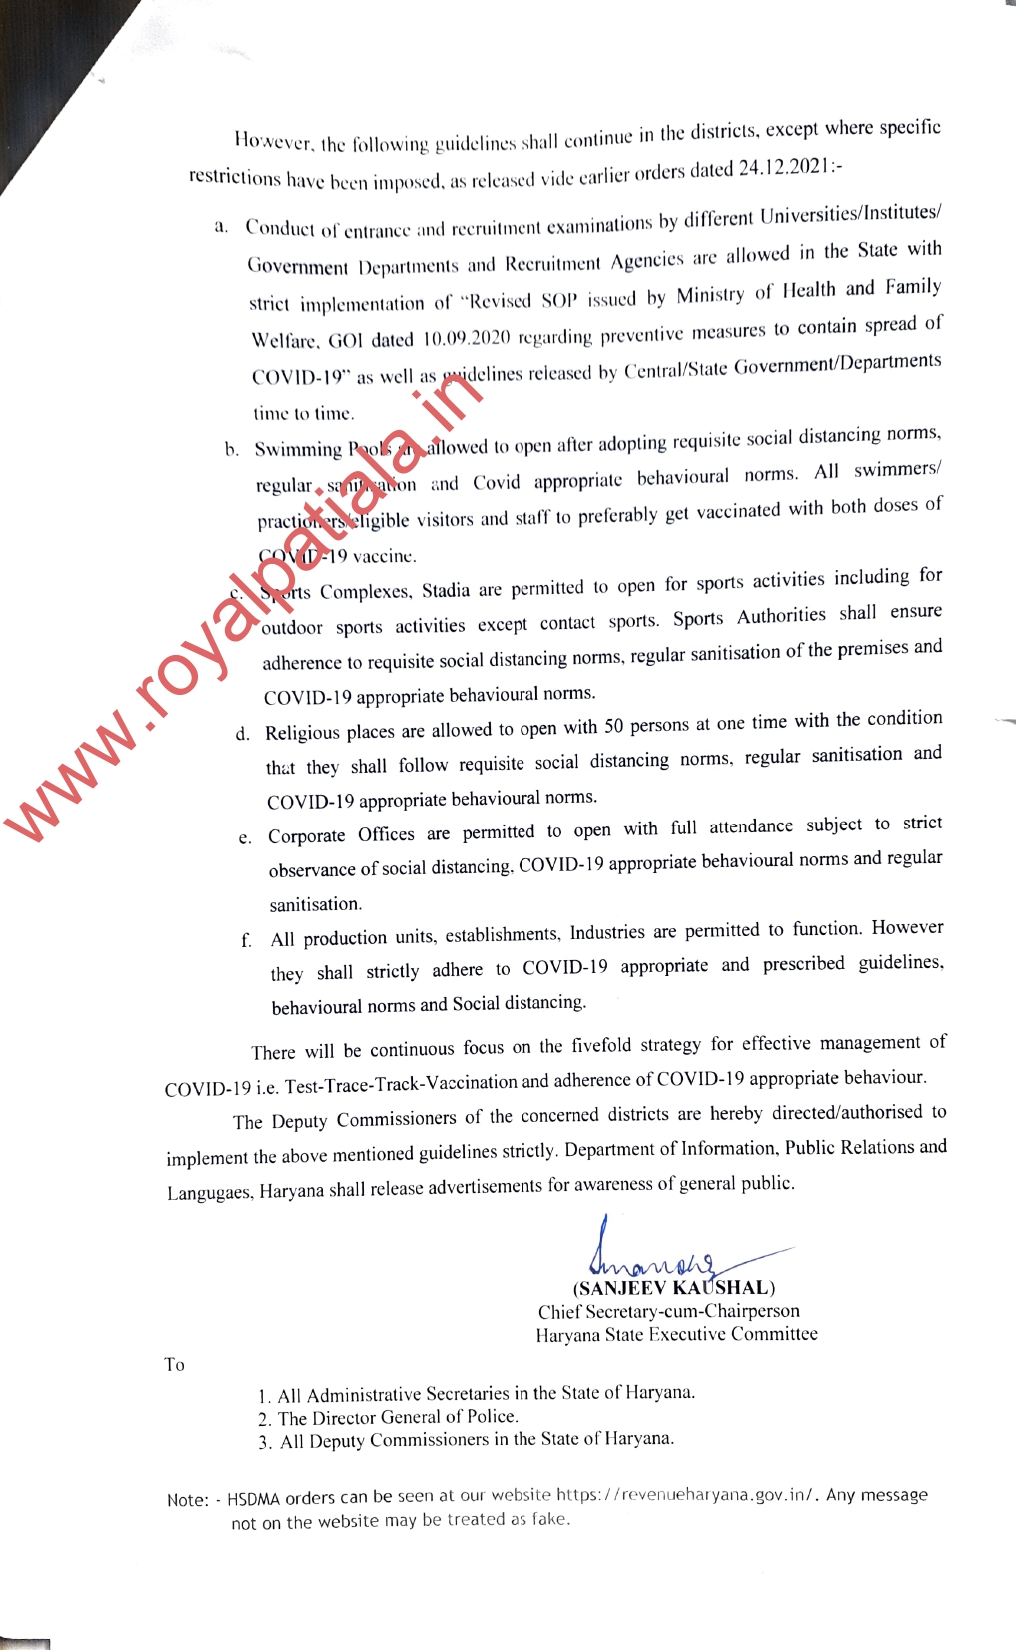 Covid restrictions- Haryana government issues “Mahamari Alert- Surakshit Haryana”